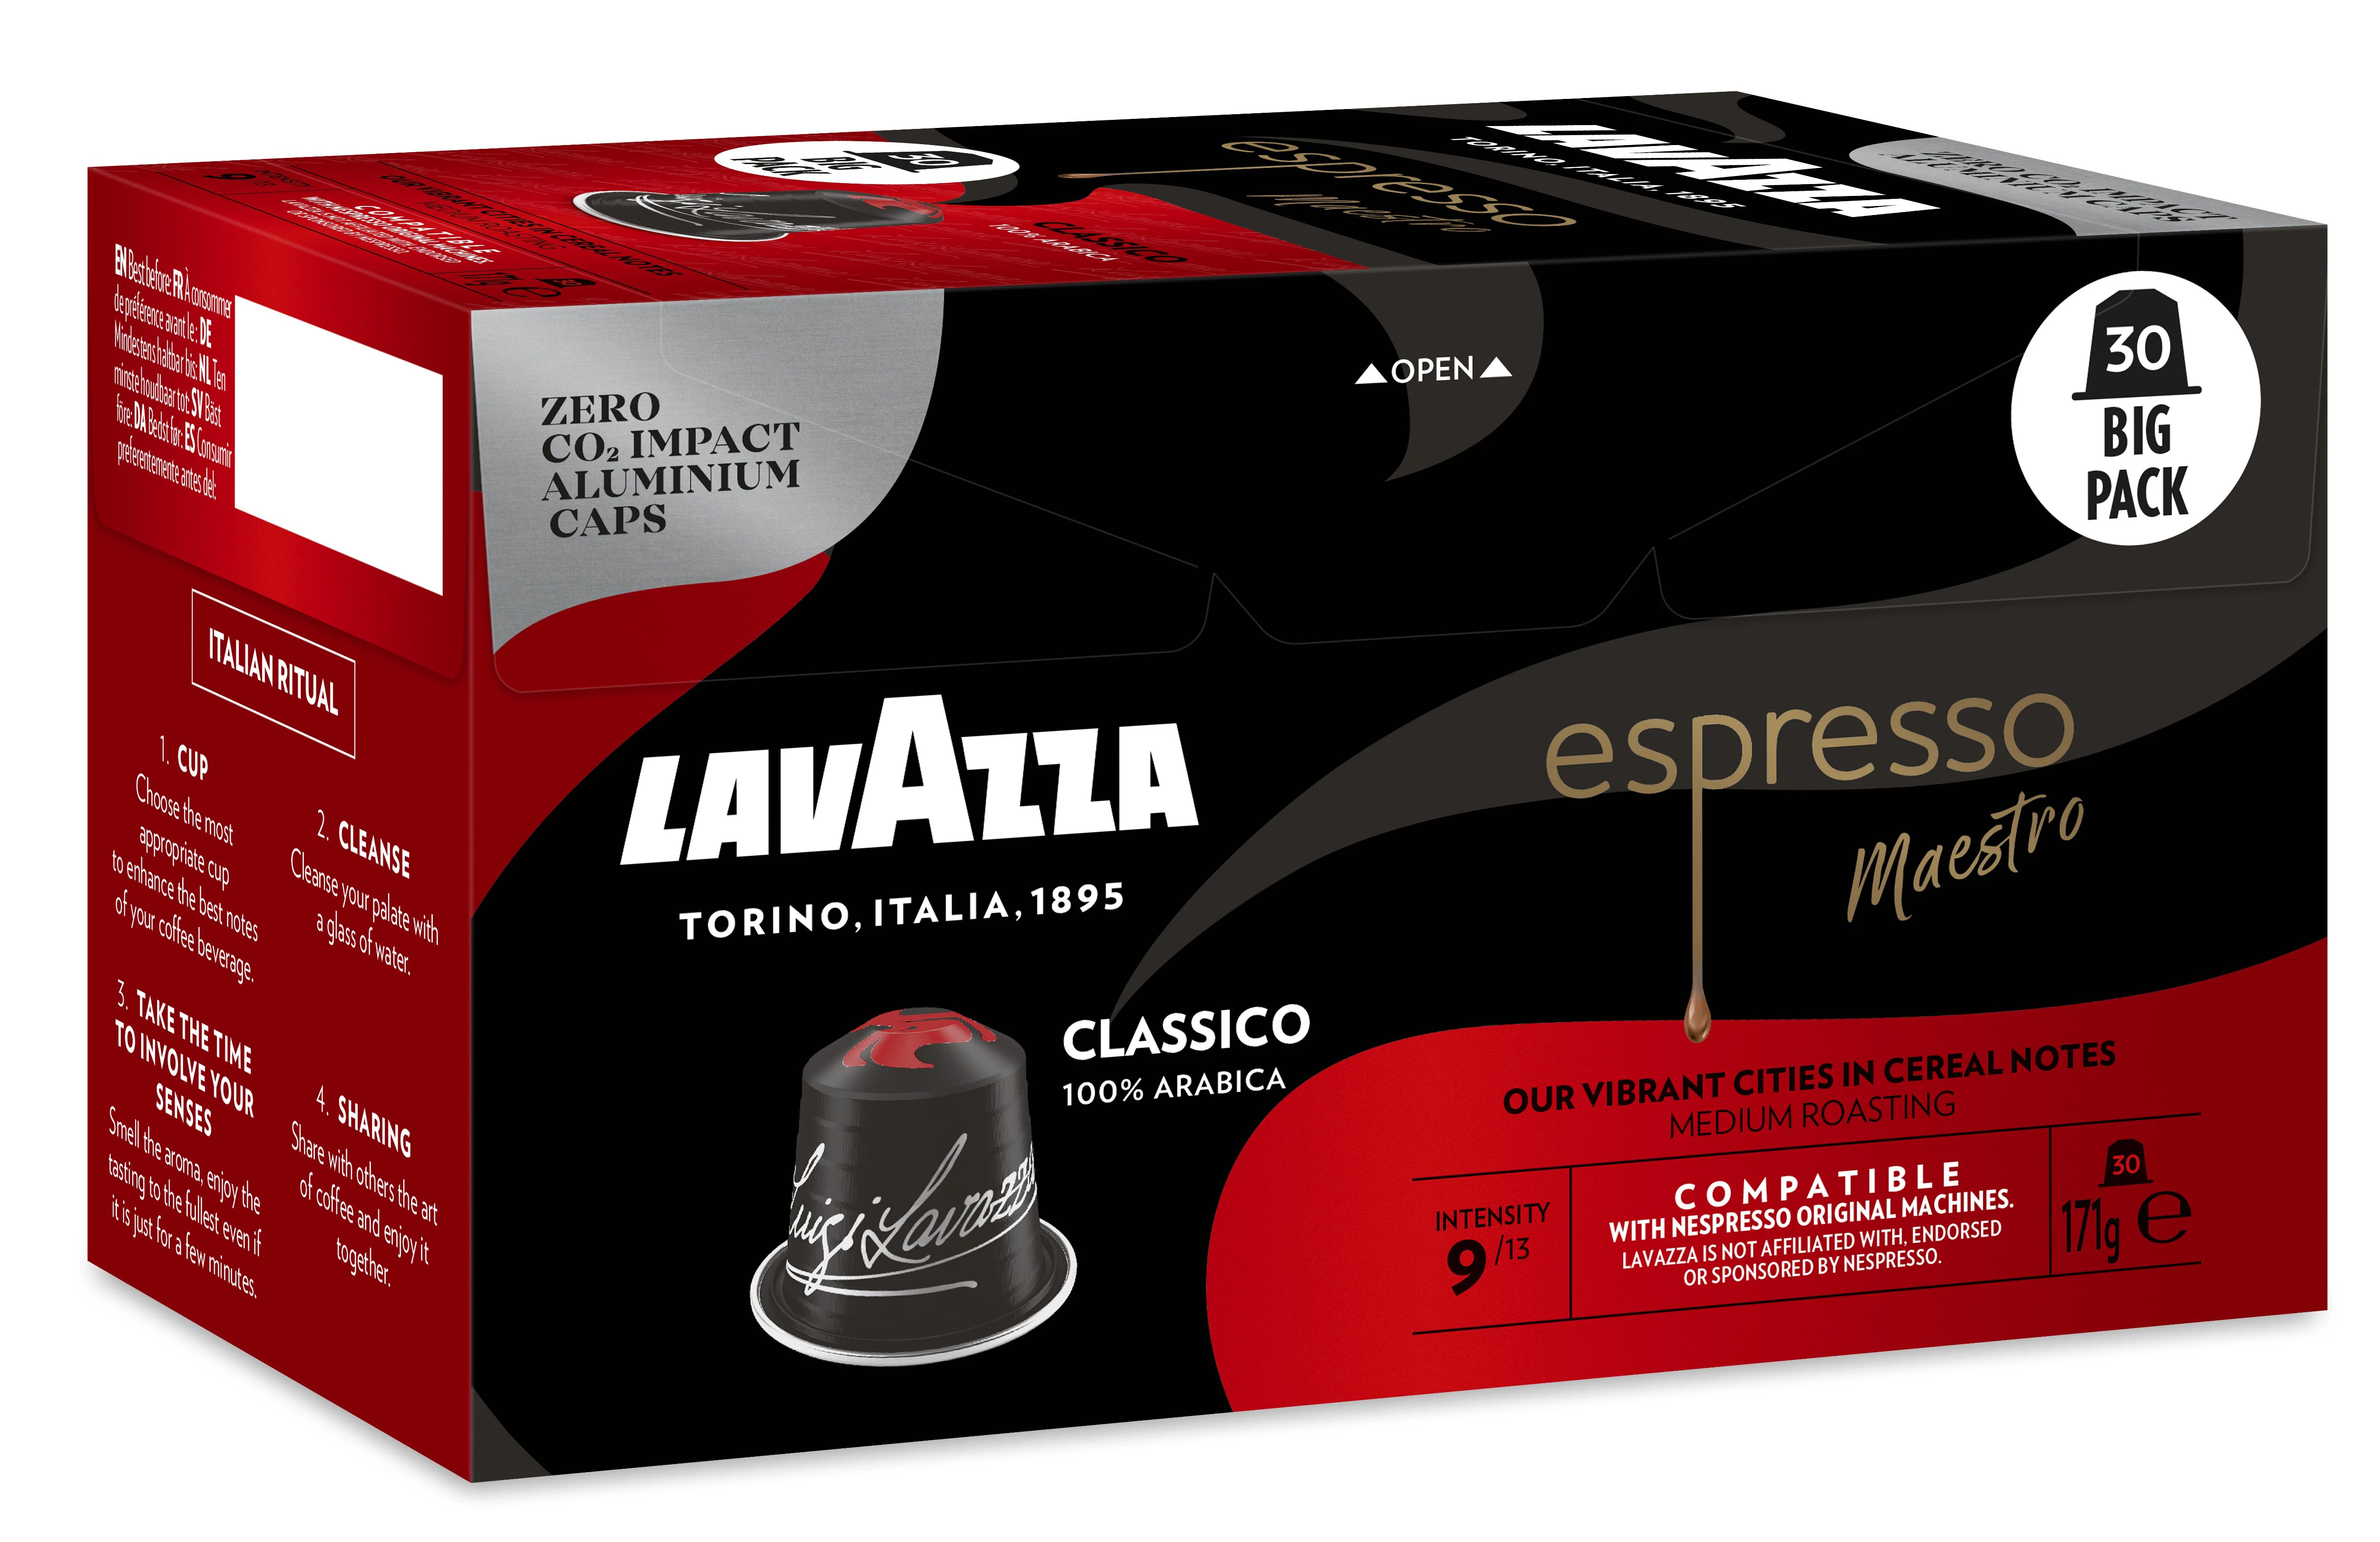 Капсулы Café Espresso Maestro Classico Совместимые Nespresso; х30; 165г - LAVAZZA